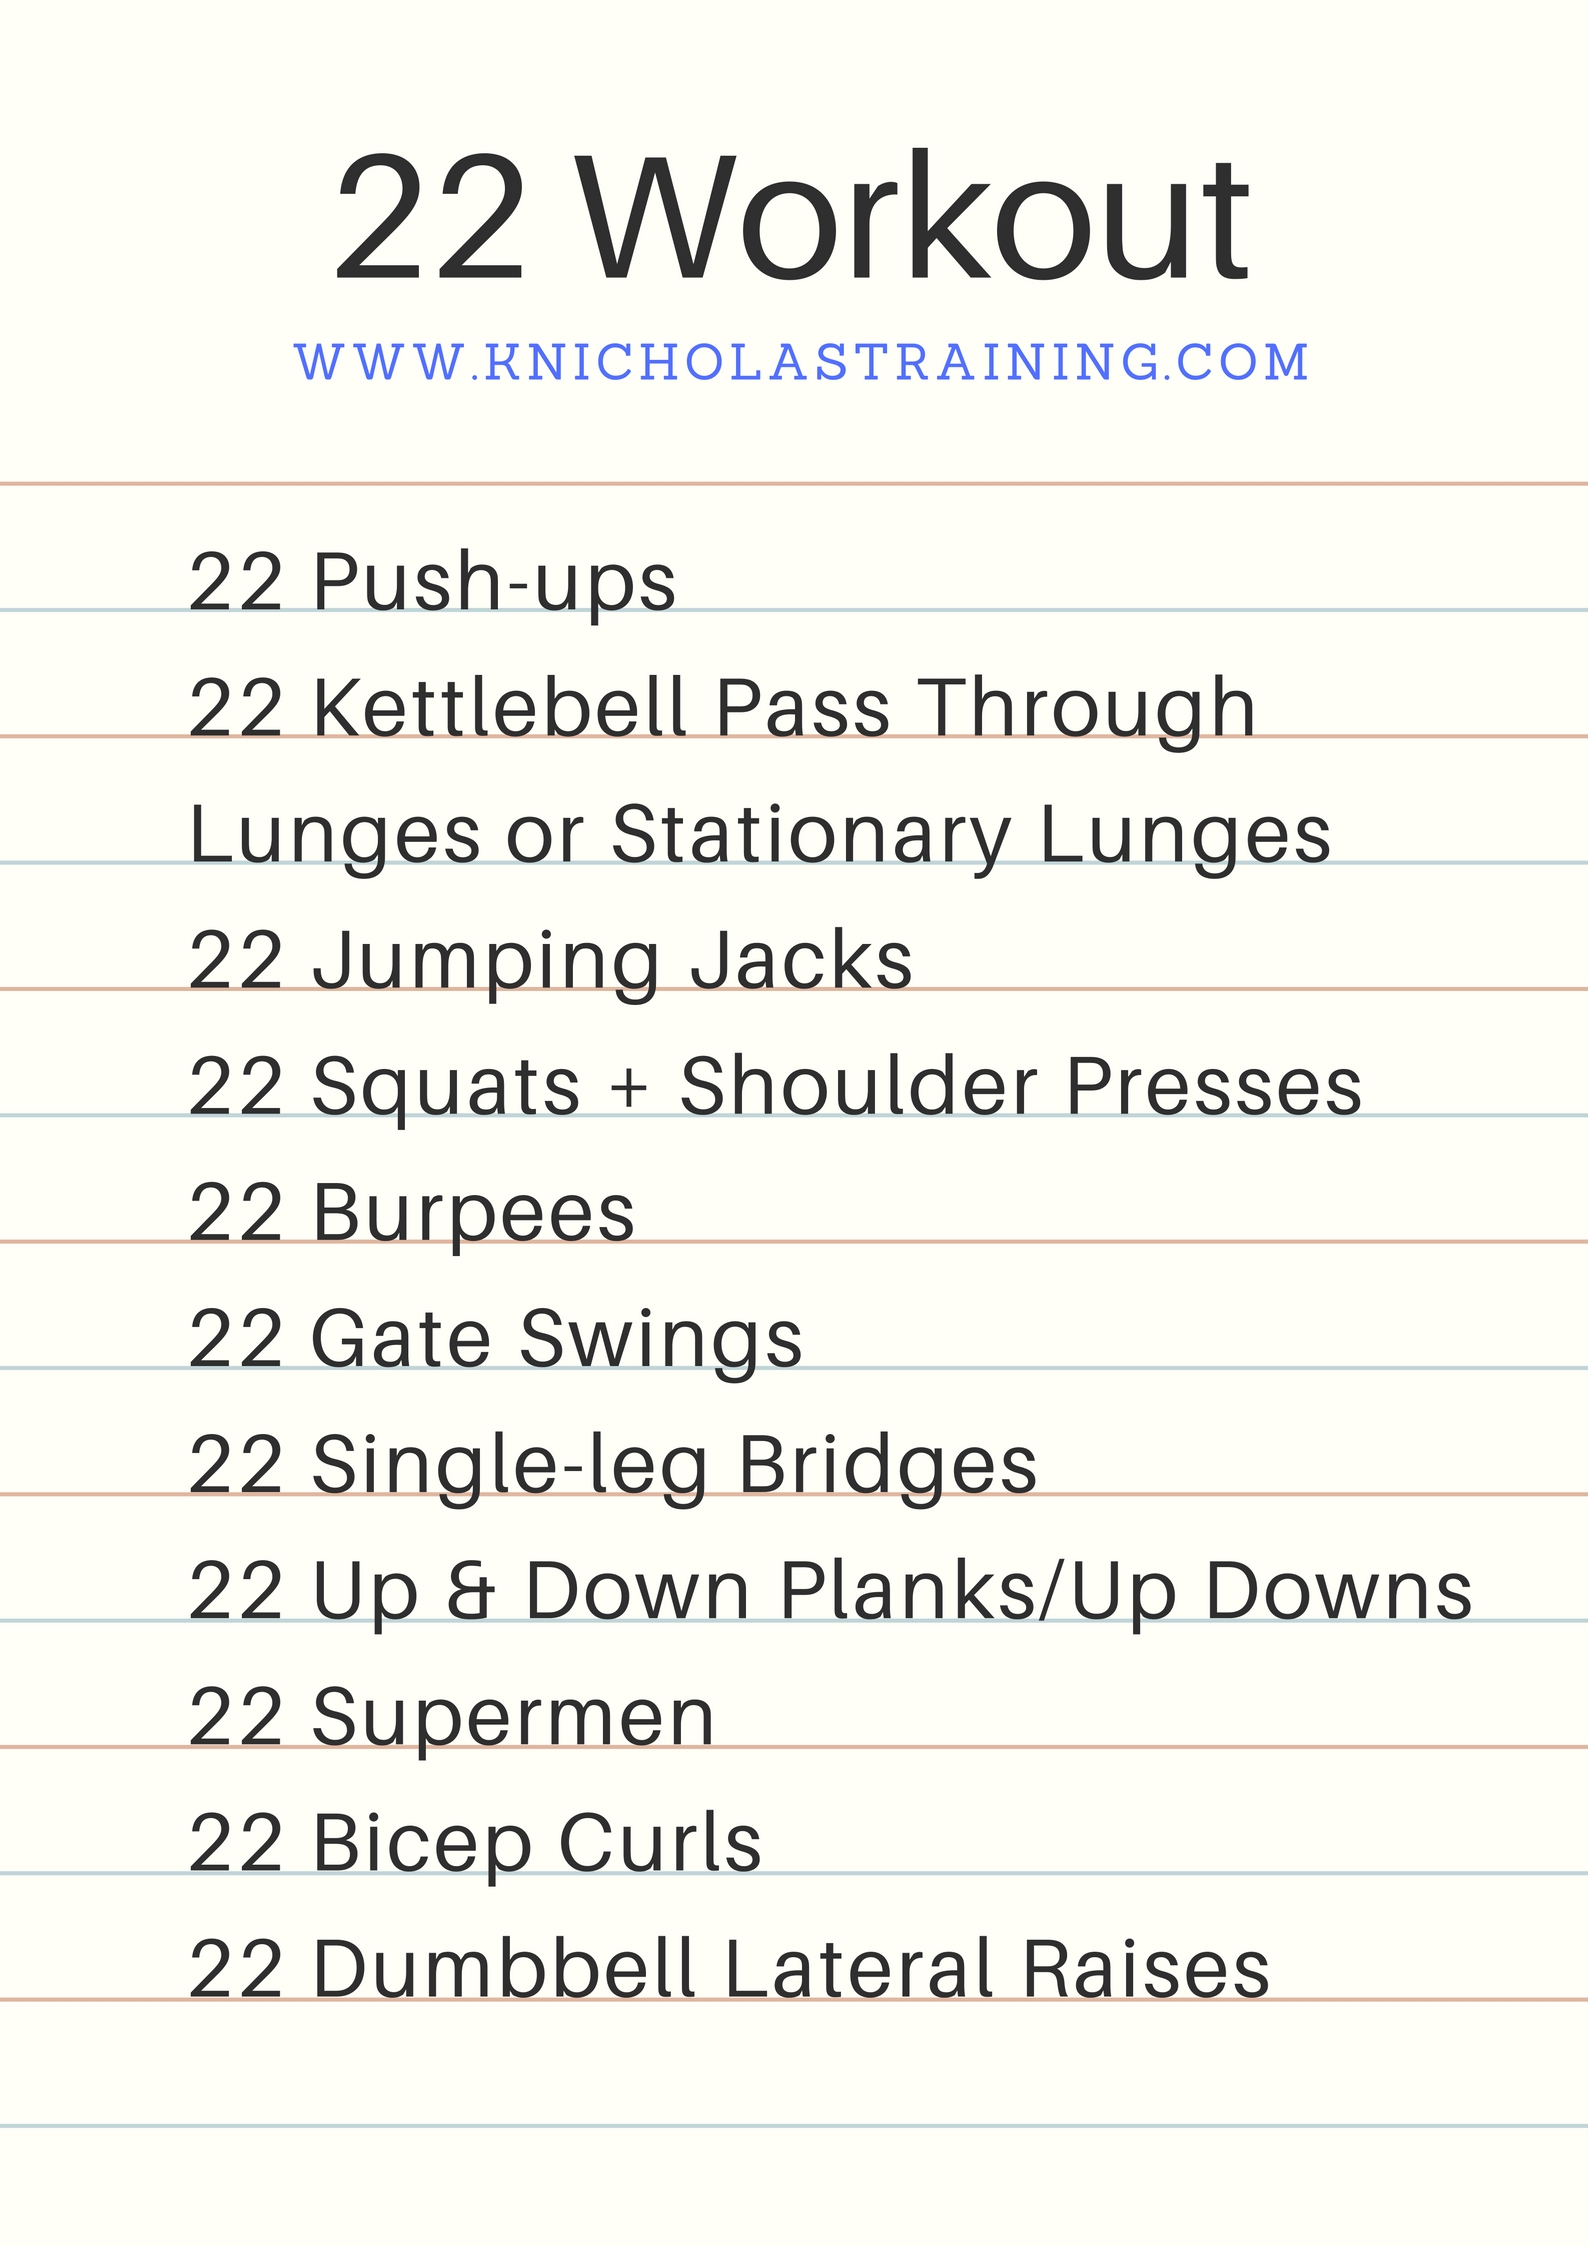 22 Rep Workout